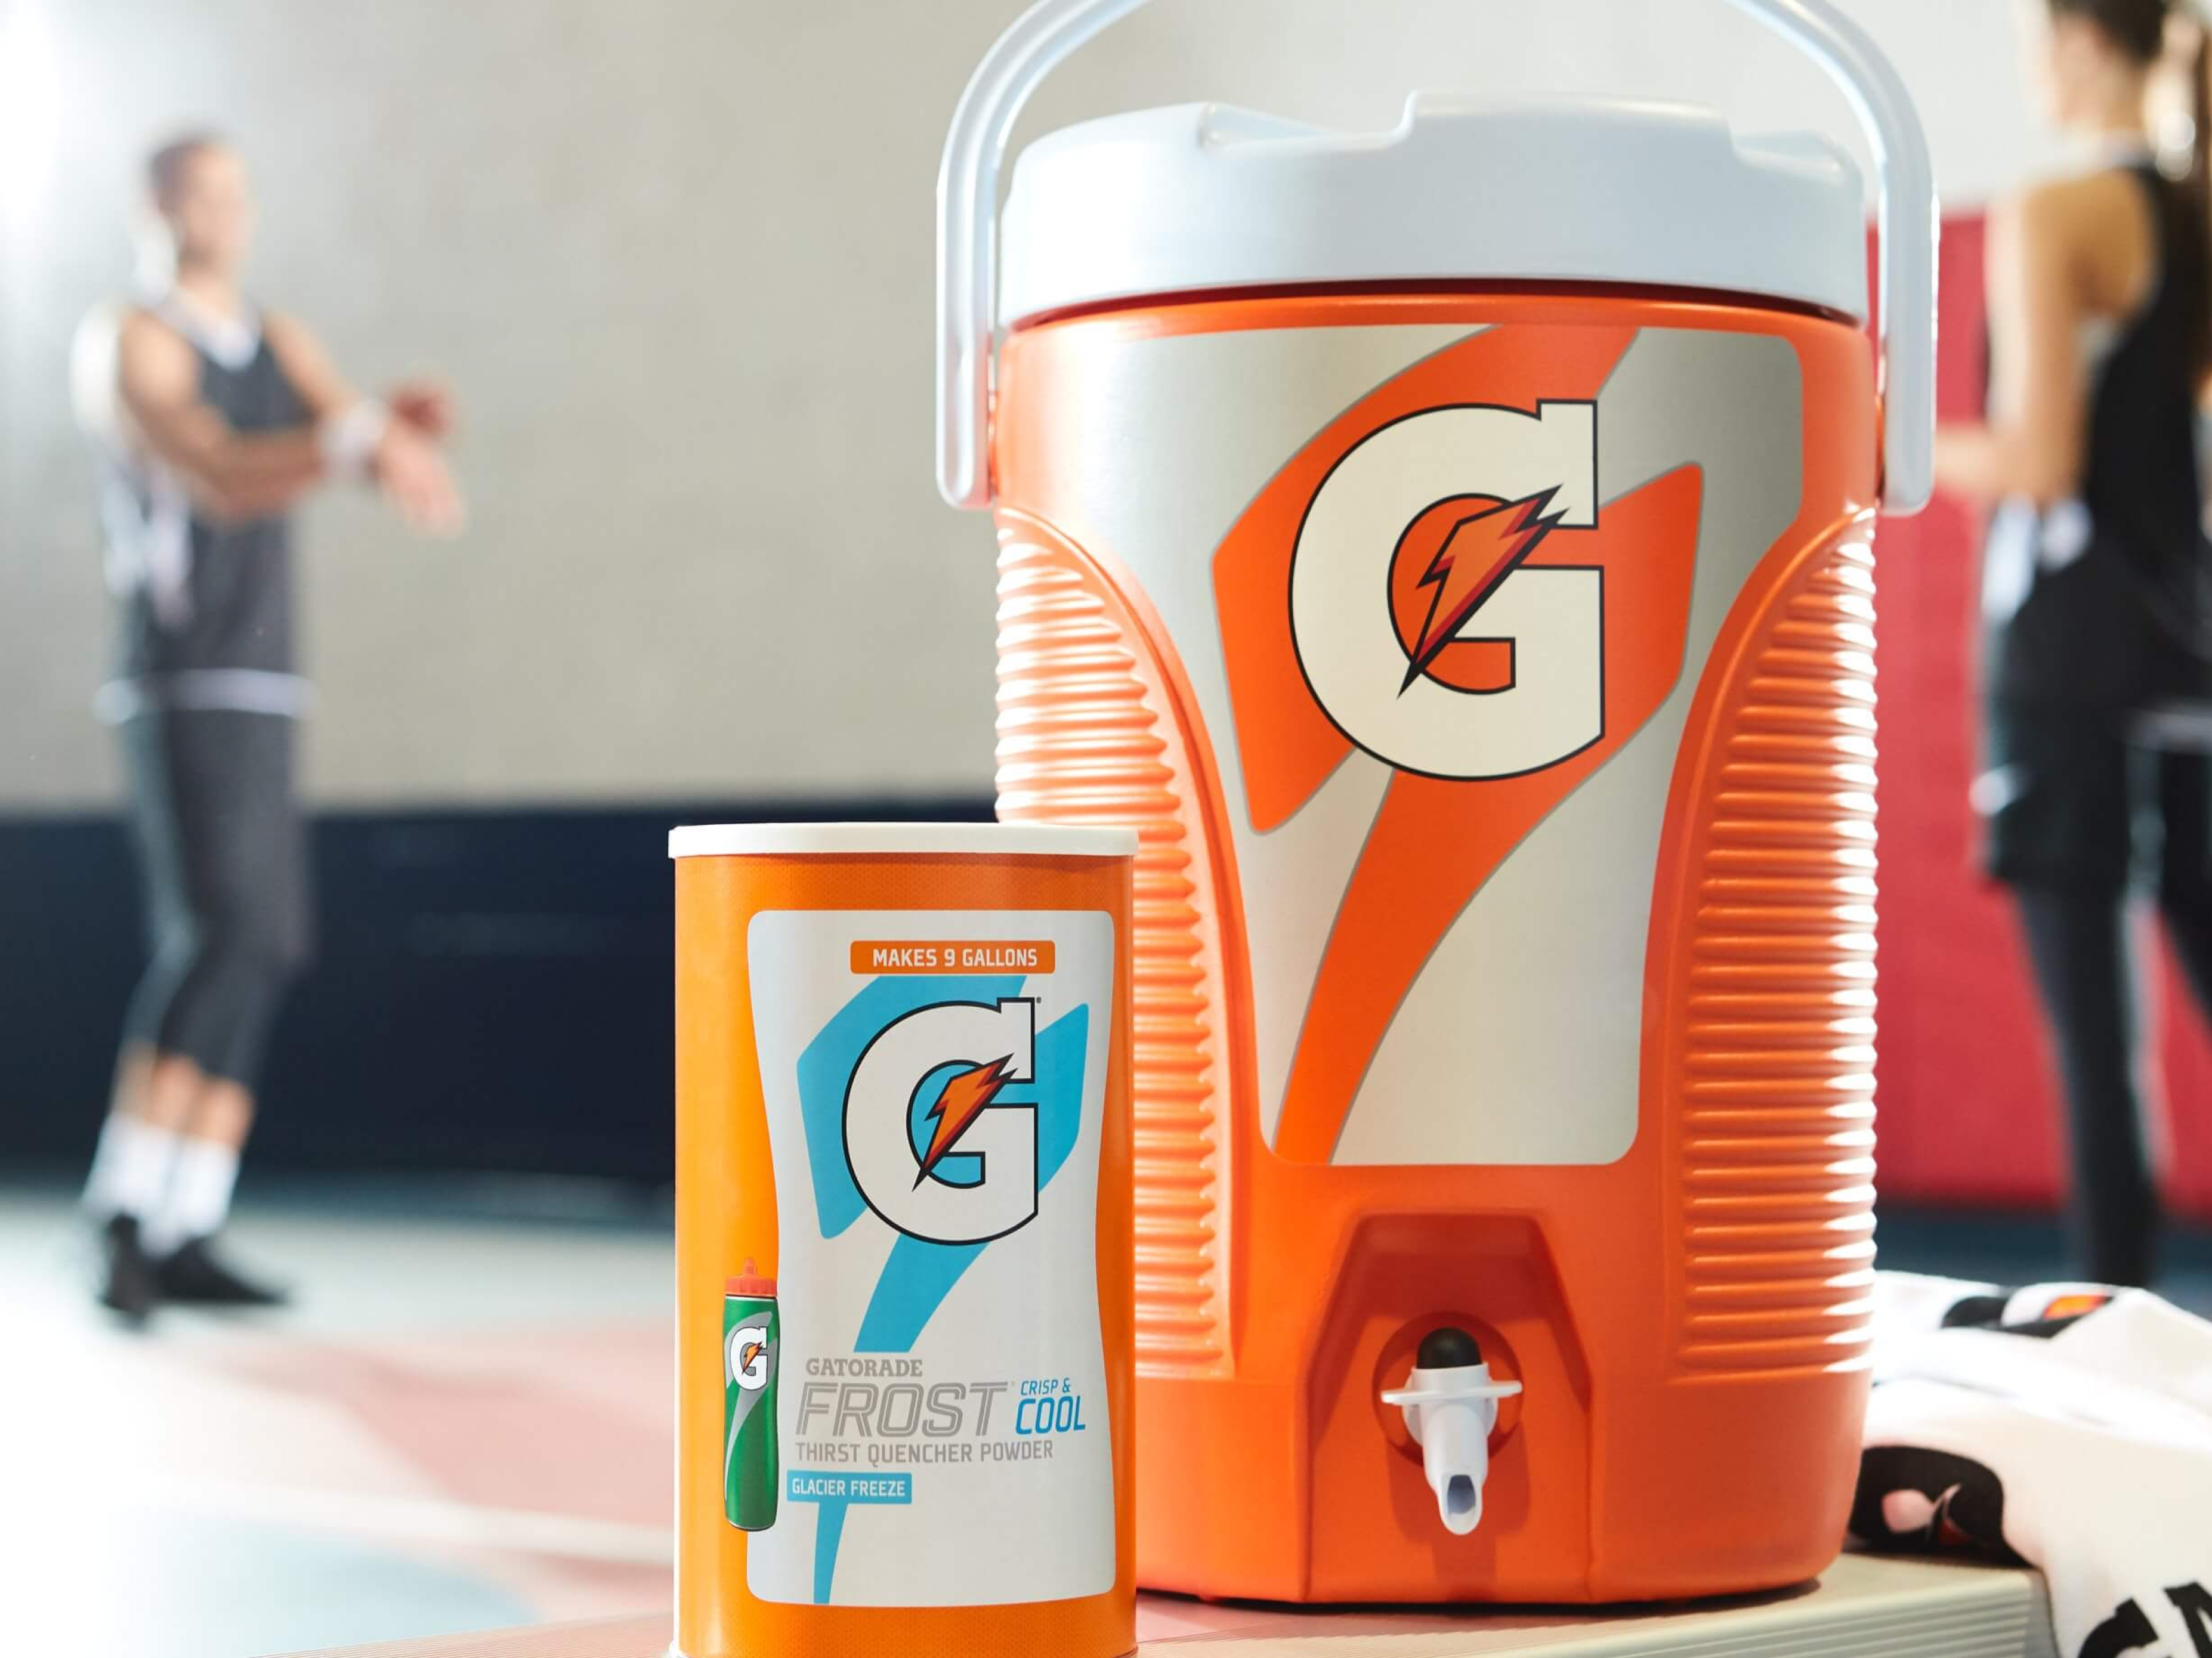 Gatorade Sideline Cooler next to a canister of Gatorade Powder